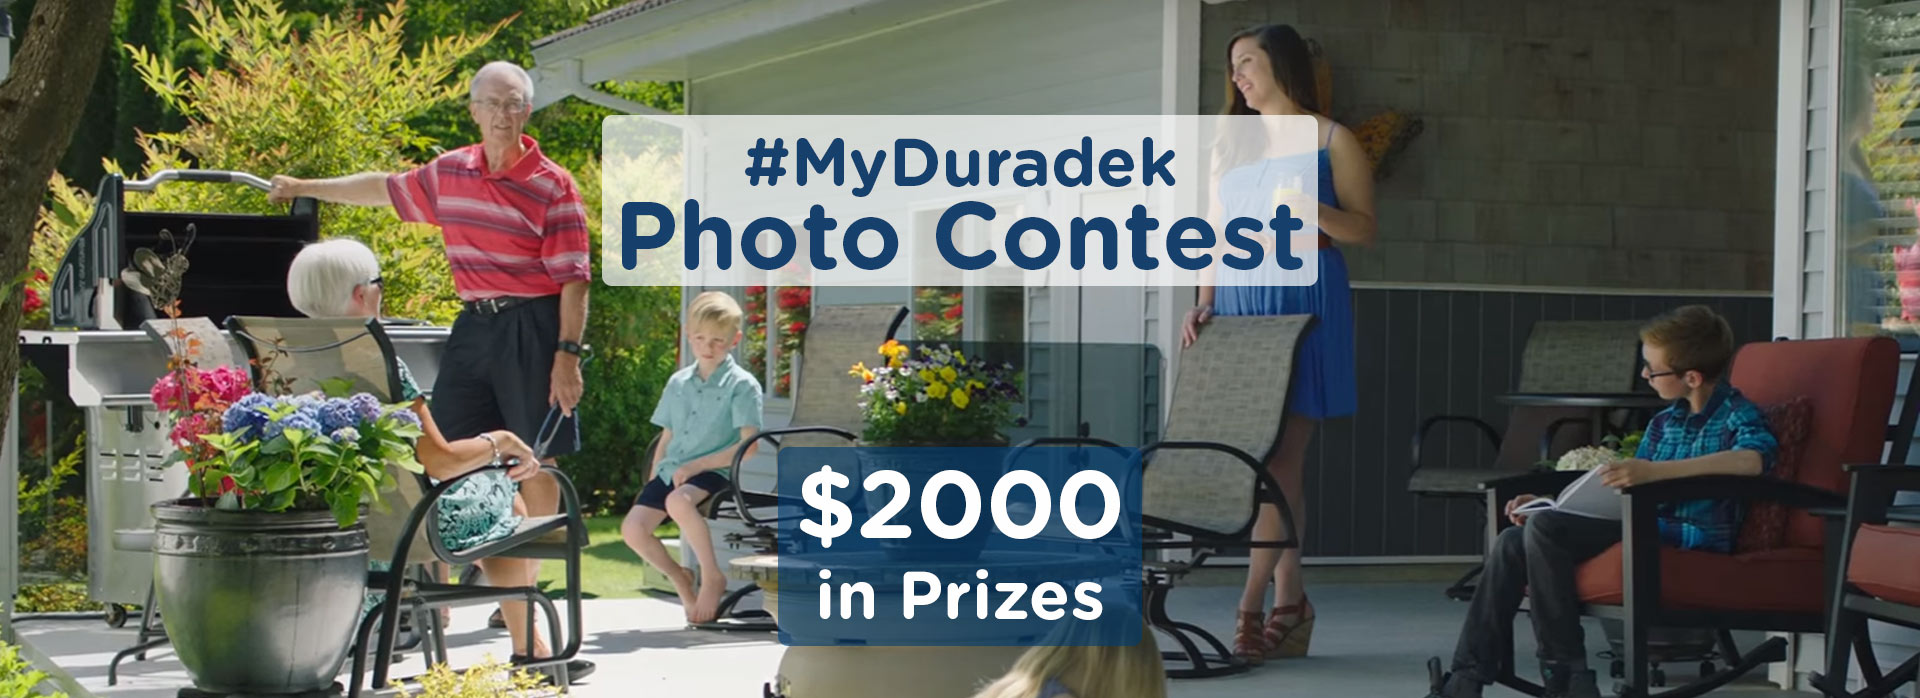 My Duradek Photo Contest on Social Media